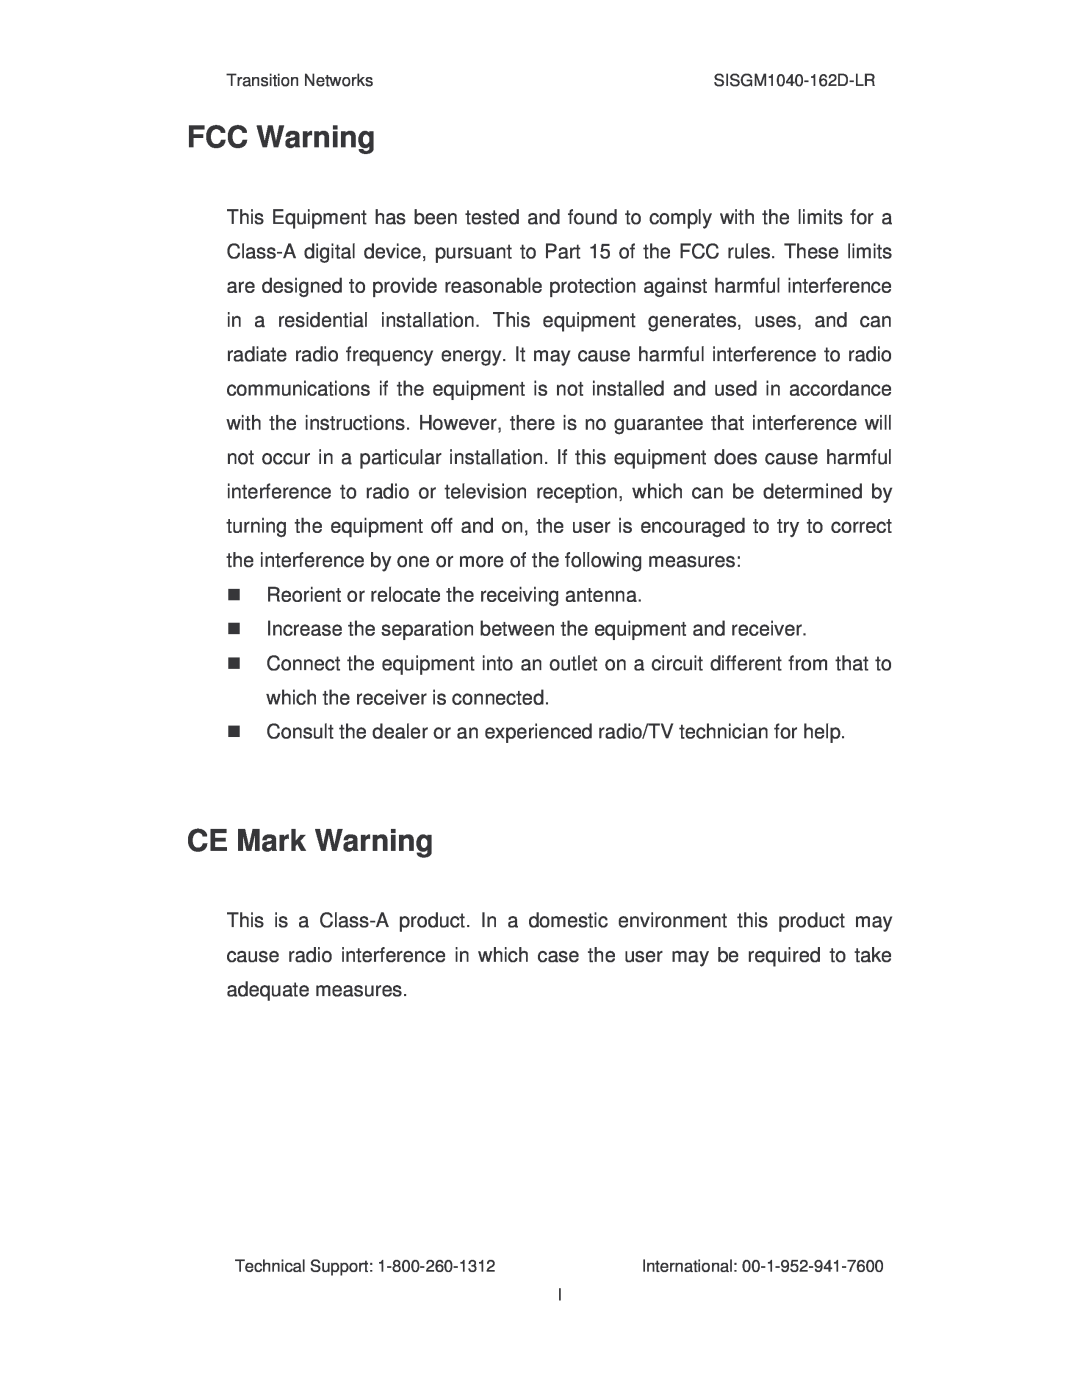 Transition Networks SISGM1040-162D manual FCC Warning, CE Mark Warning 